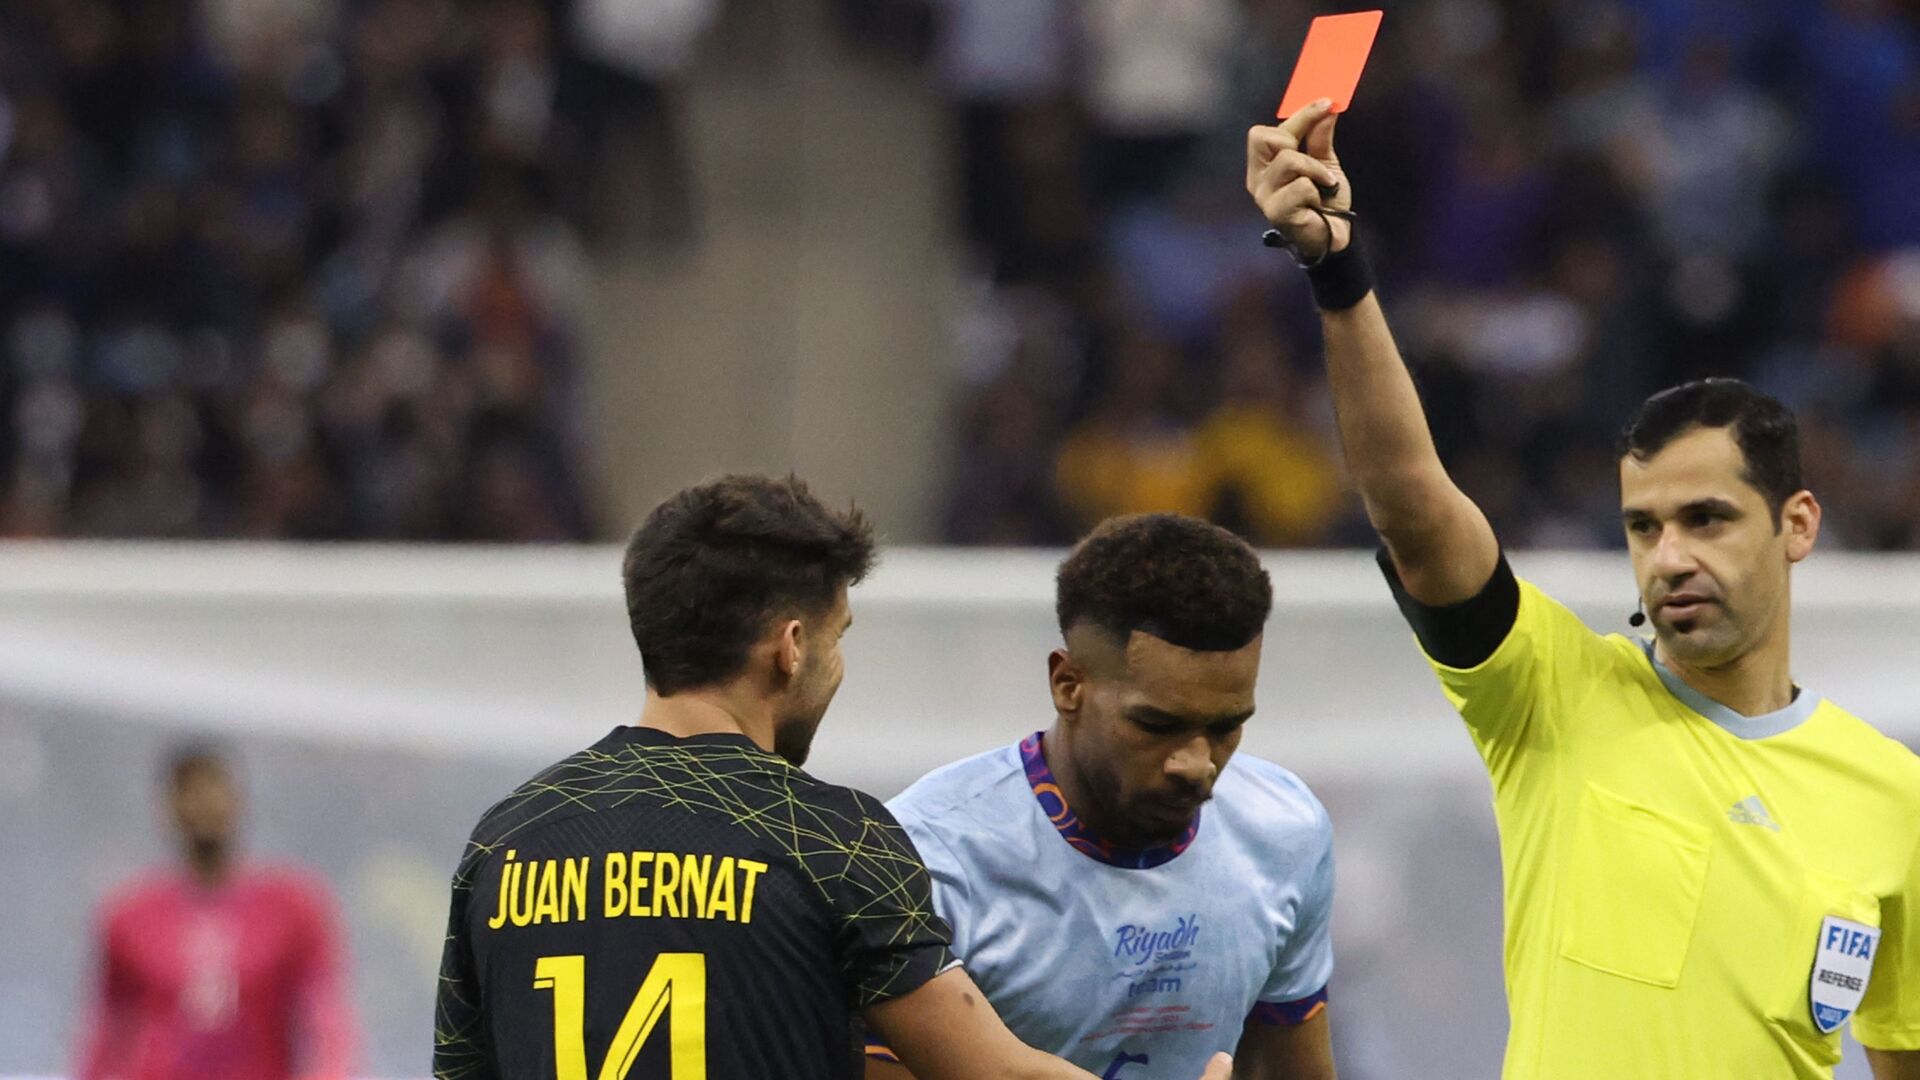 Watch PSG's Juan Bernat Receive Red Card vs. Riyadh All-Star XI